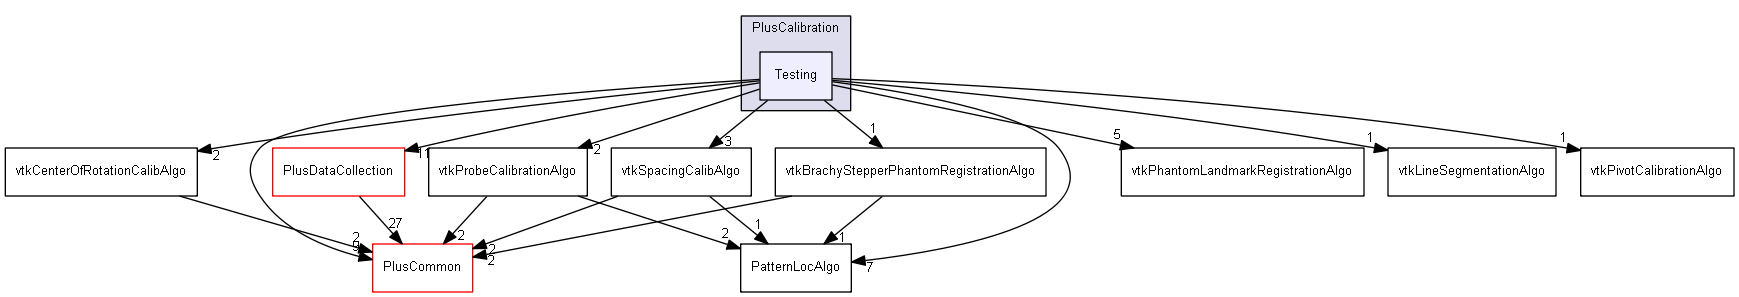 src/PlusCalibration/Testing